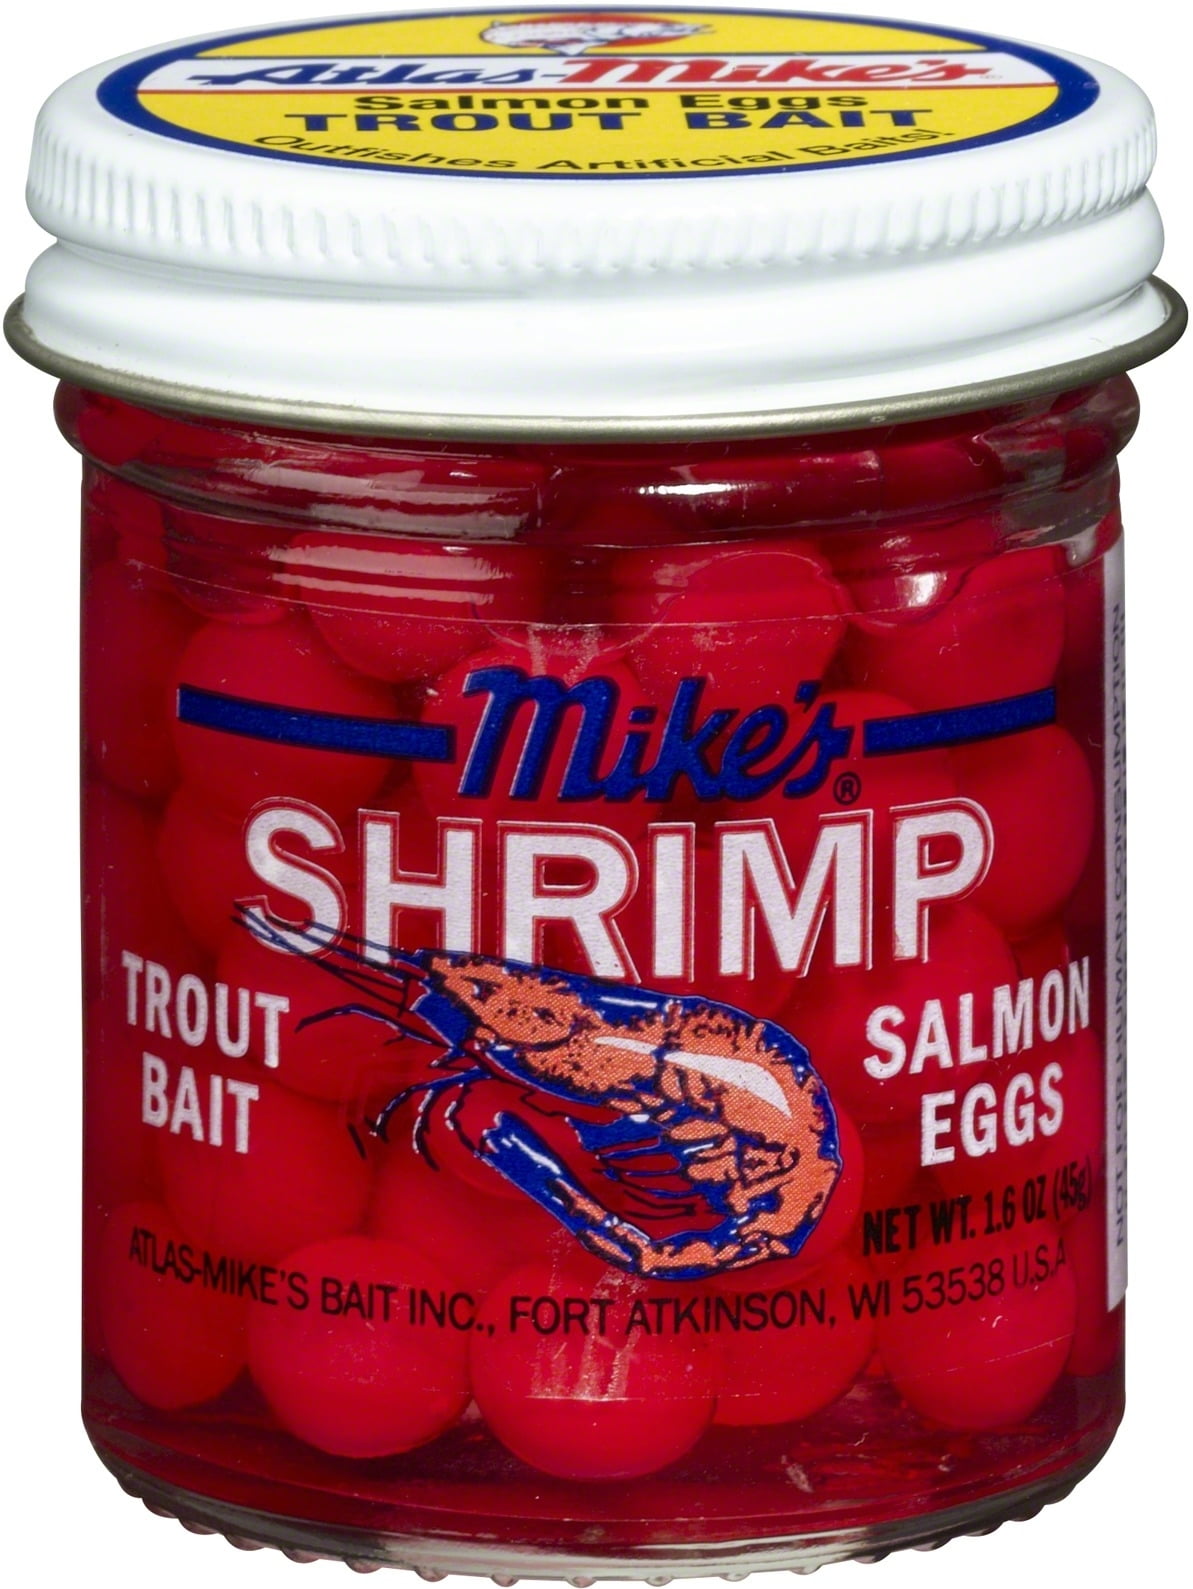 Mike's Shrimp Salmon Eggs, Fluorescent Red - 23 oz jar